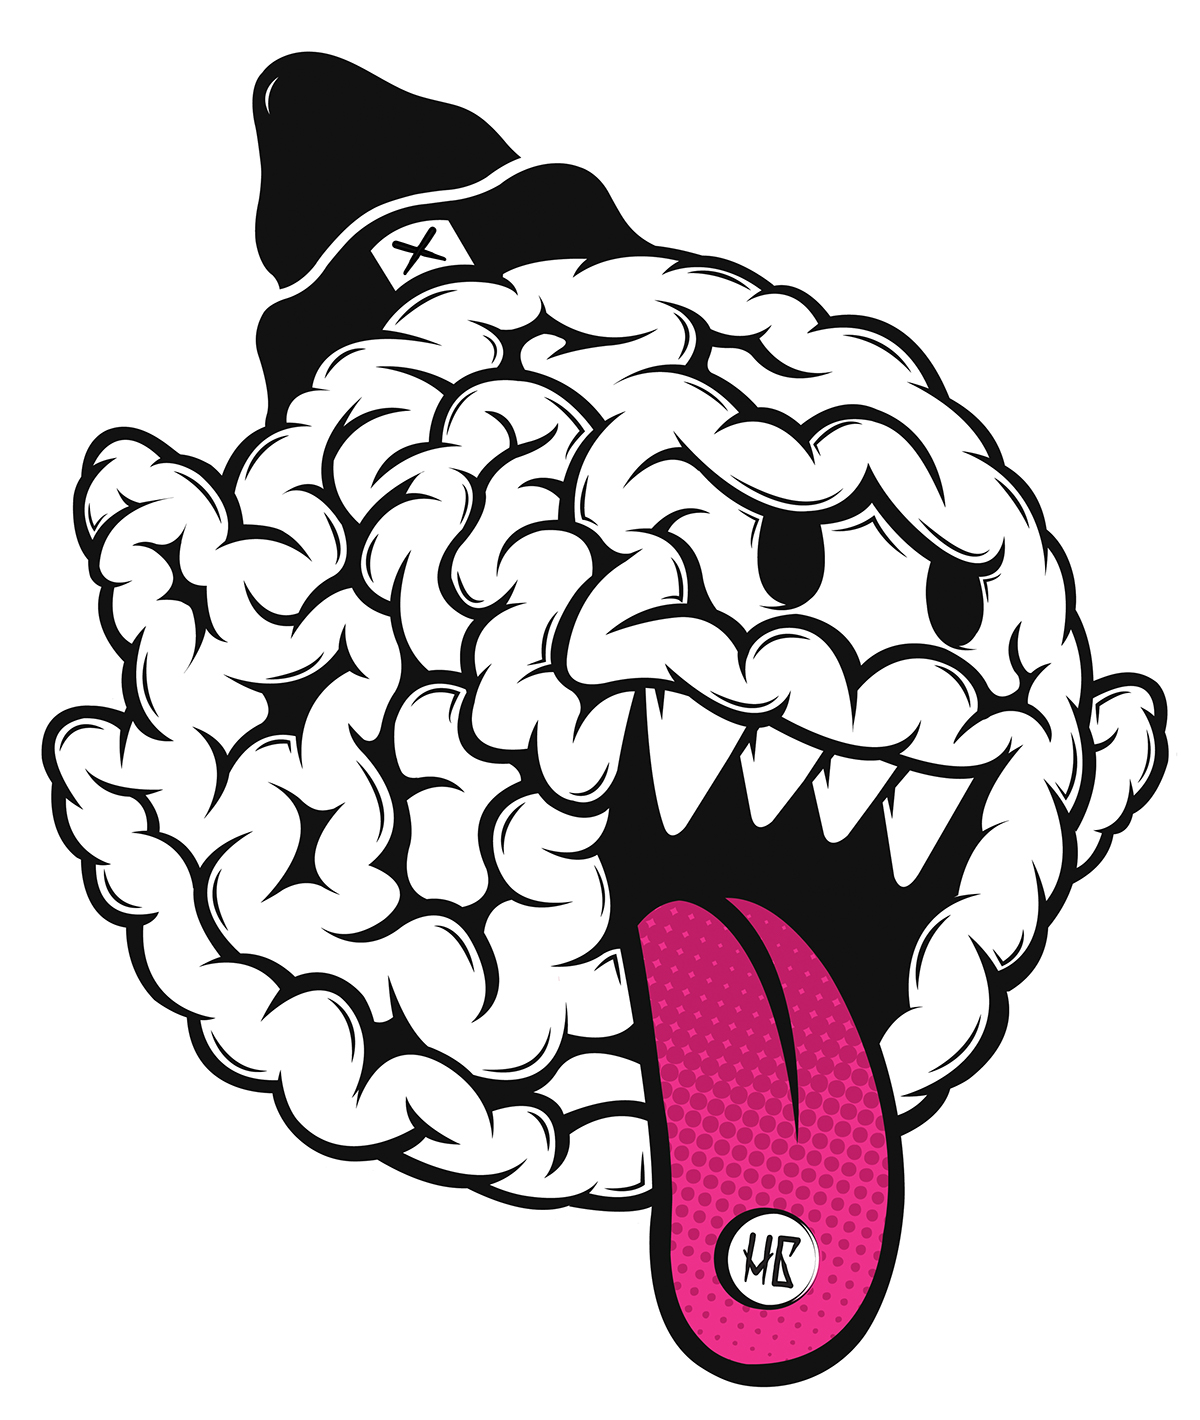 art artwork illustrations graphics design vector vectorart ghost brain SuperMario apparel Clothing skatewear streetwear Gaming